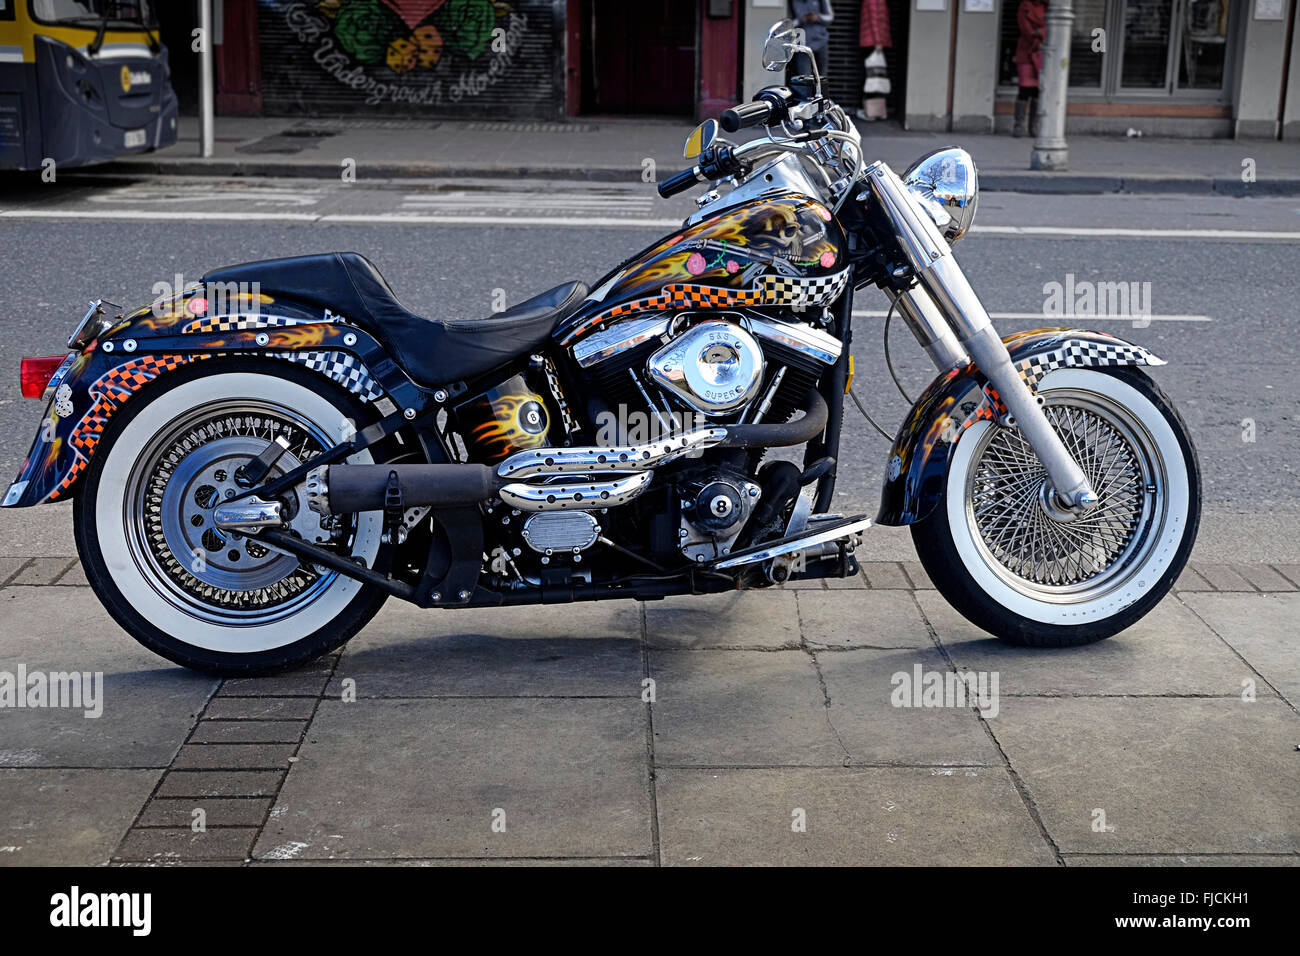 Heavily customised Harley Davidson Motorcycle in Dublin Ireland. Stock Photo